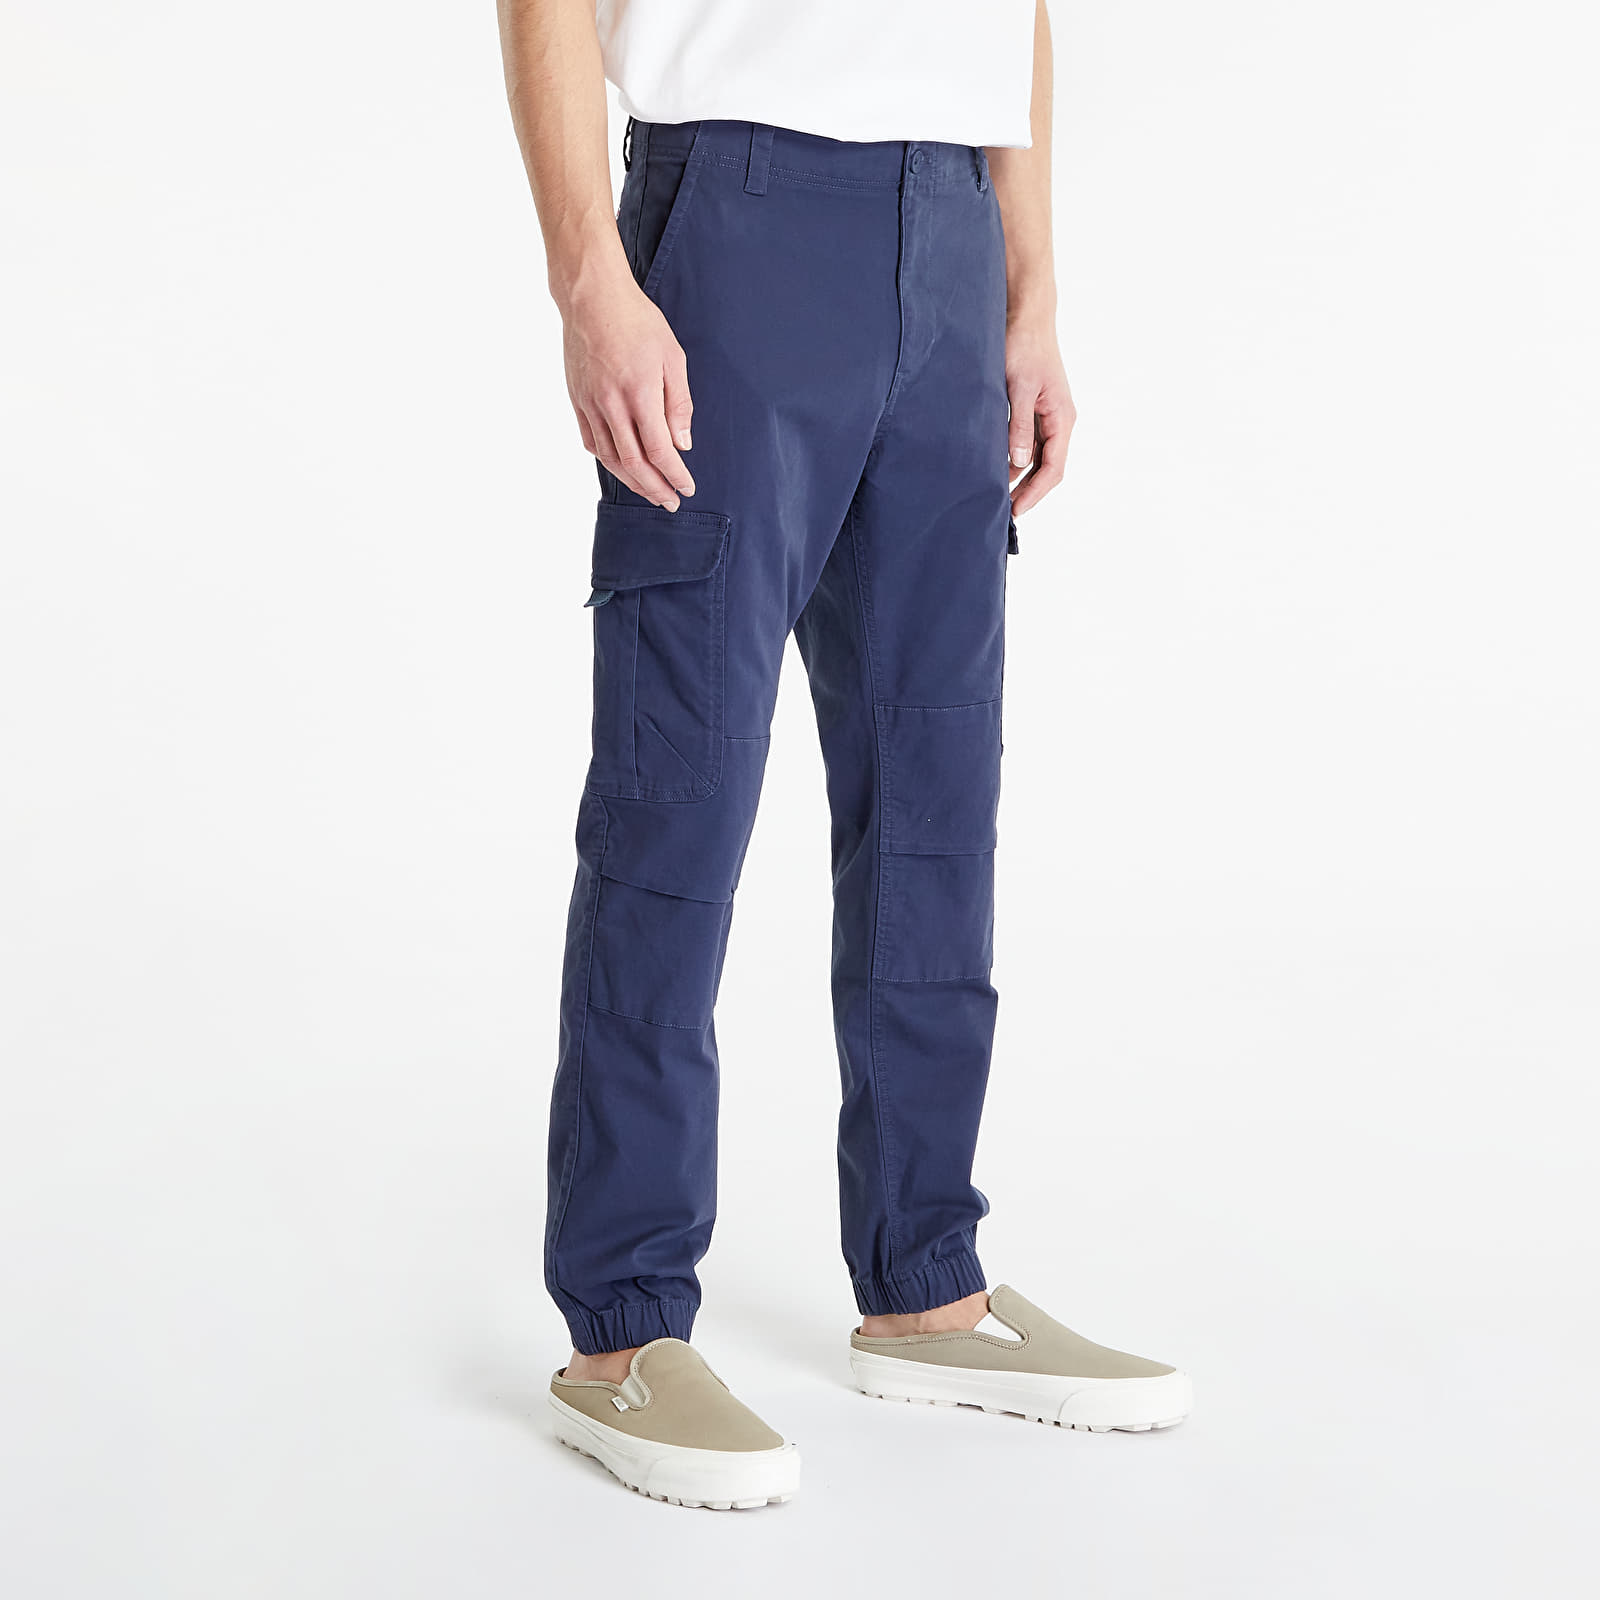 Converse x Kim Jones Men's Cargo Pants Navy Blue 10021817-A01 Retail  $170.00 | eBay